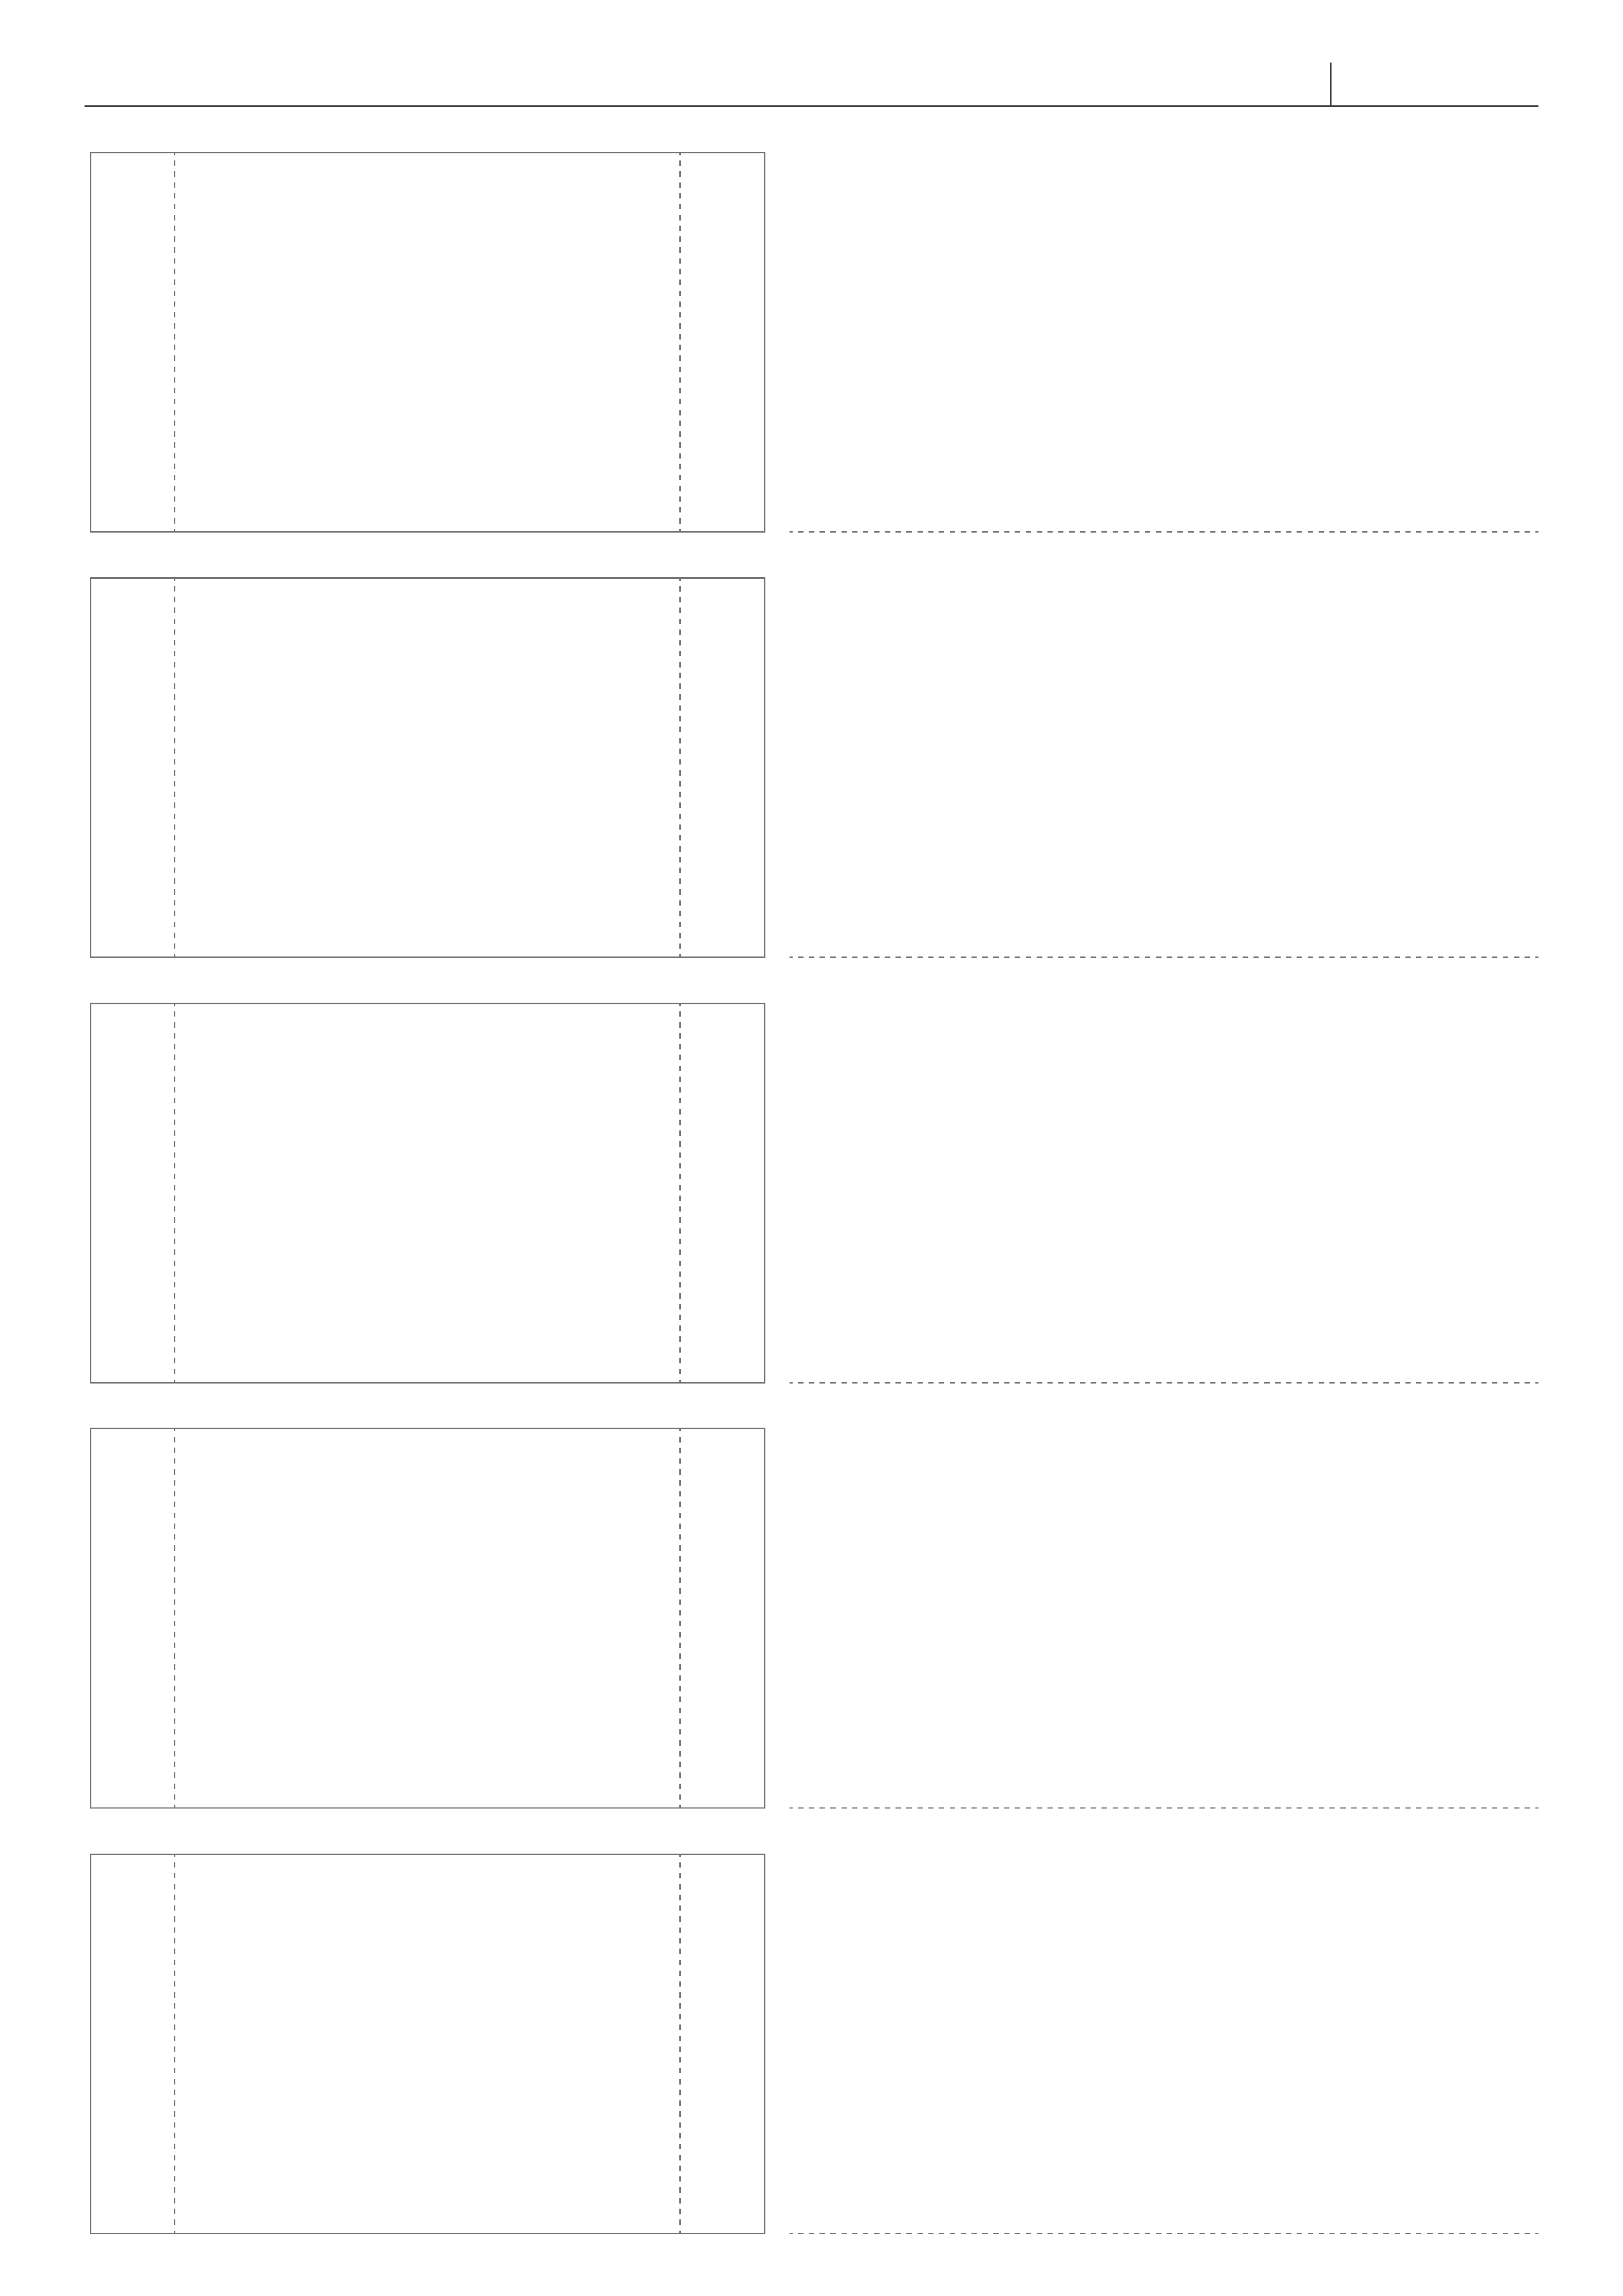 Storyboard Sheets 絵コンテ用紙 16 9 4 3 ダウンロード自由 絵コンテの書き方１０のポイント Satirical Itami Info